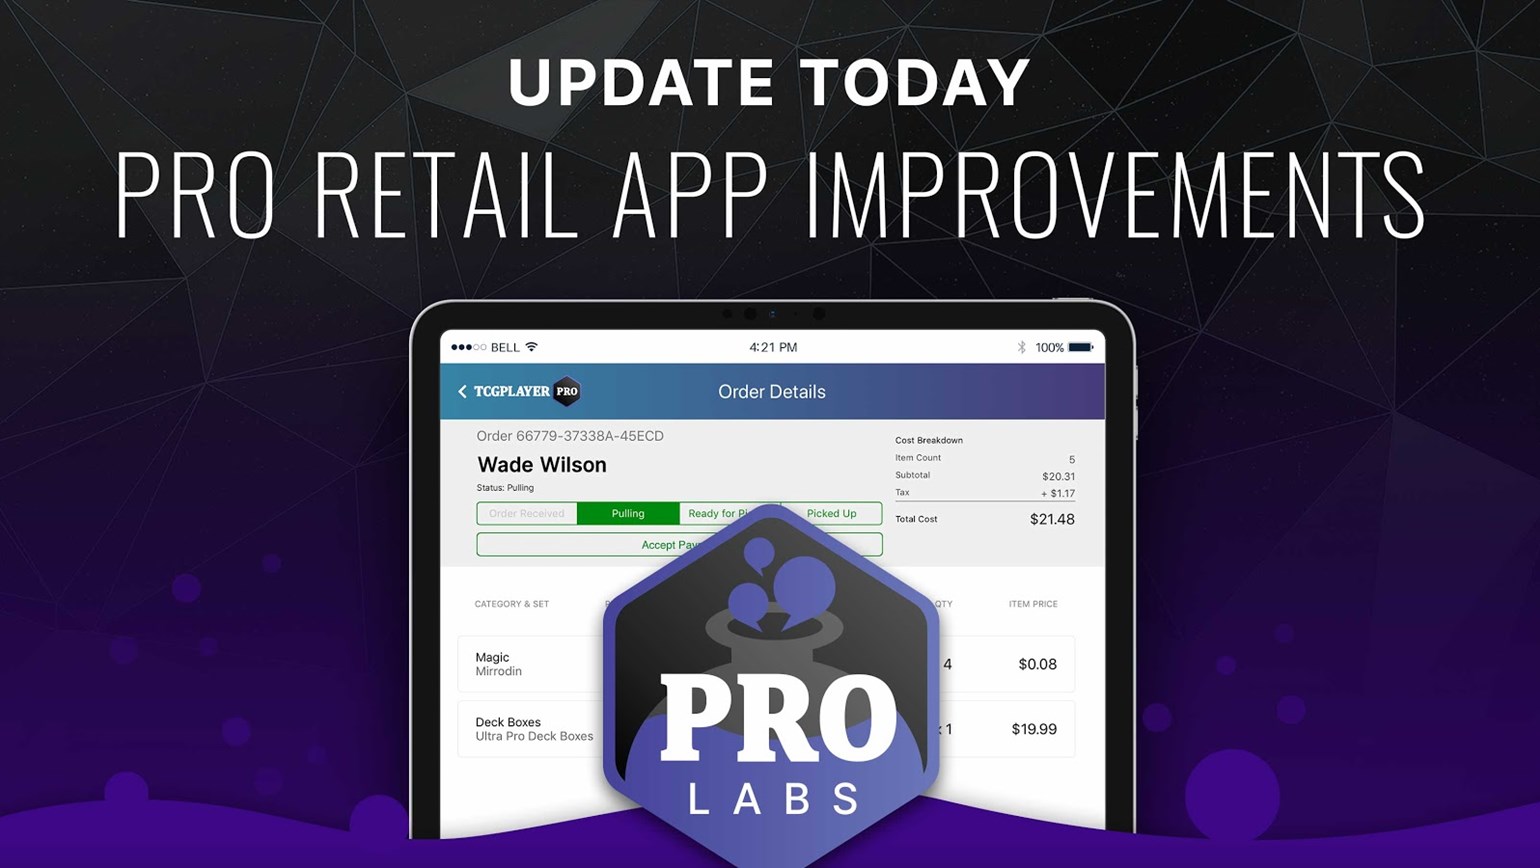 TCGplayer Pro Retail App Updates + Pro Labs Feedback